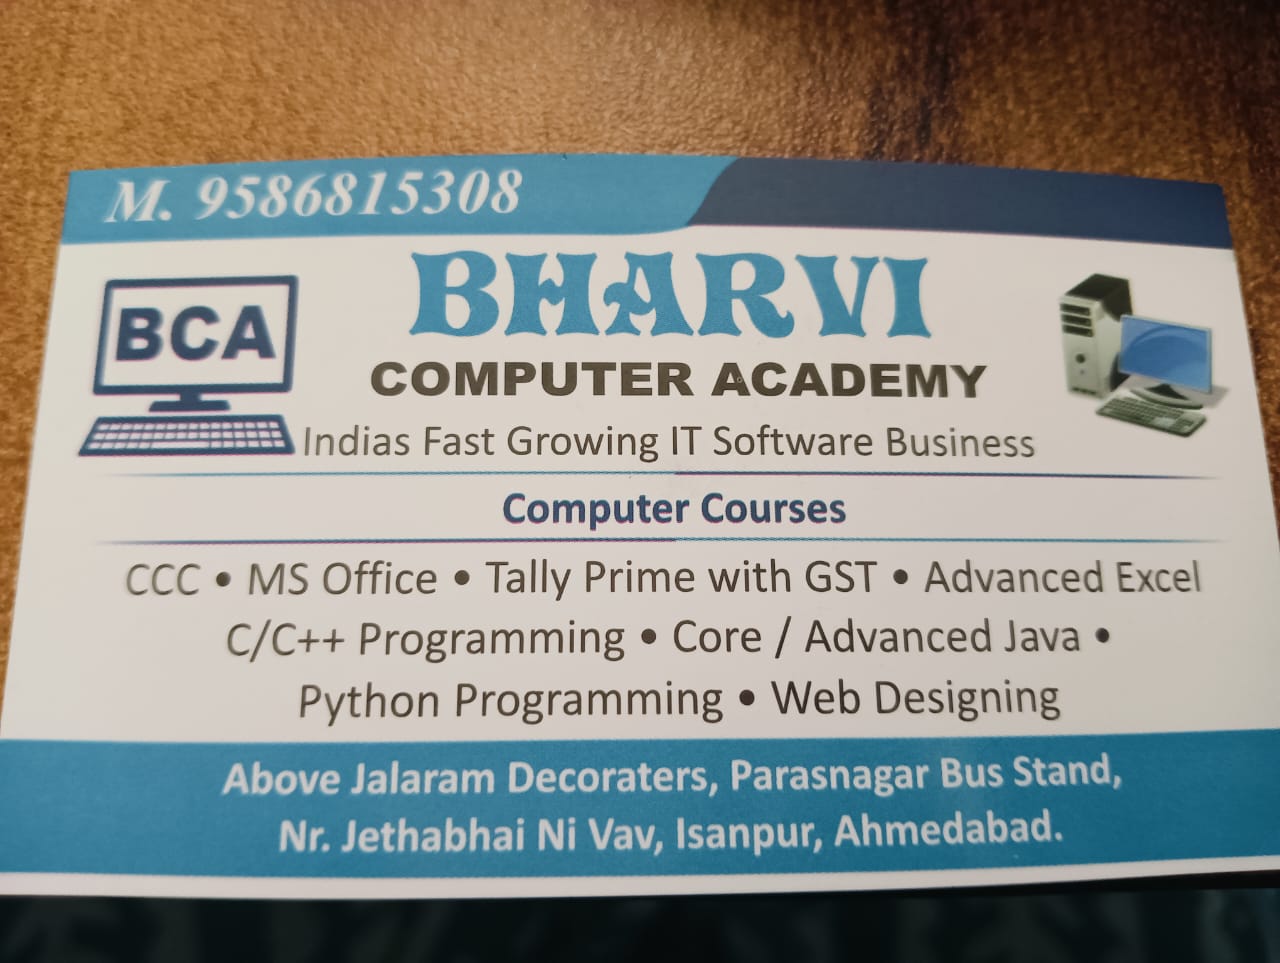 BHARVI COMPUTER ACADEMY